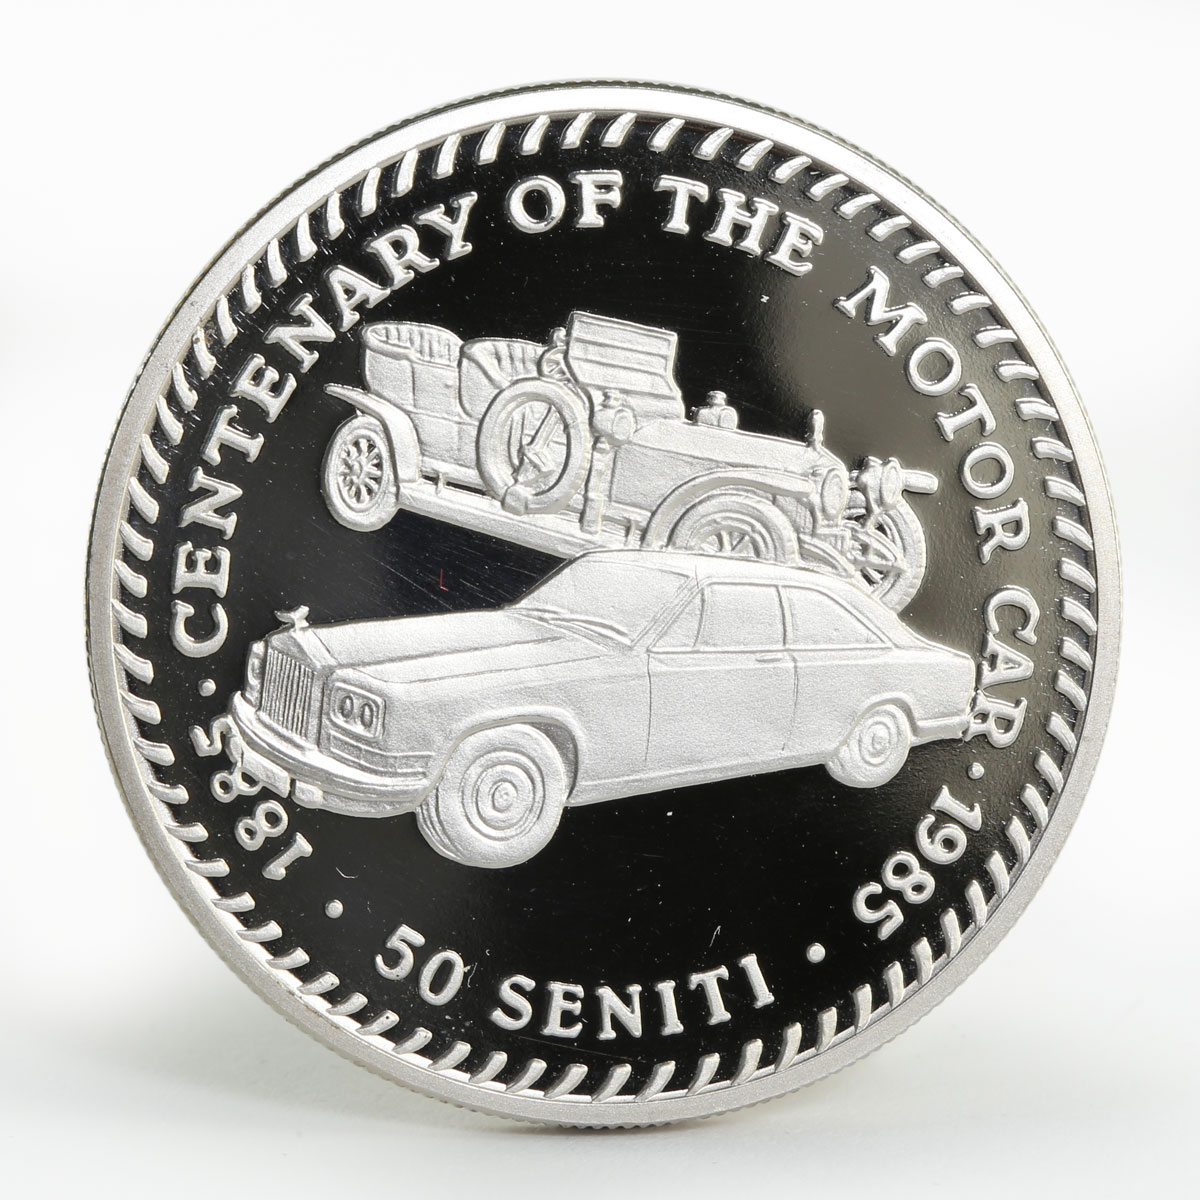 Tonga 50 seniti Rolls Royce cars proof copper-nickel coin 1985